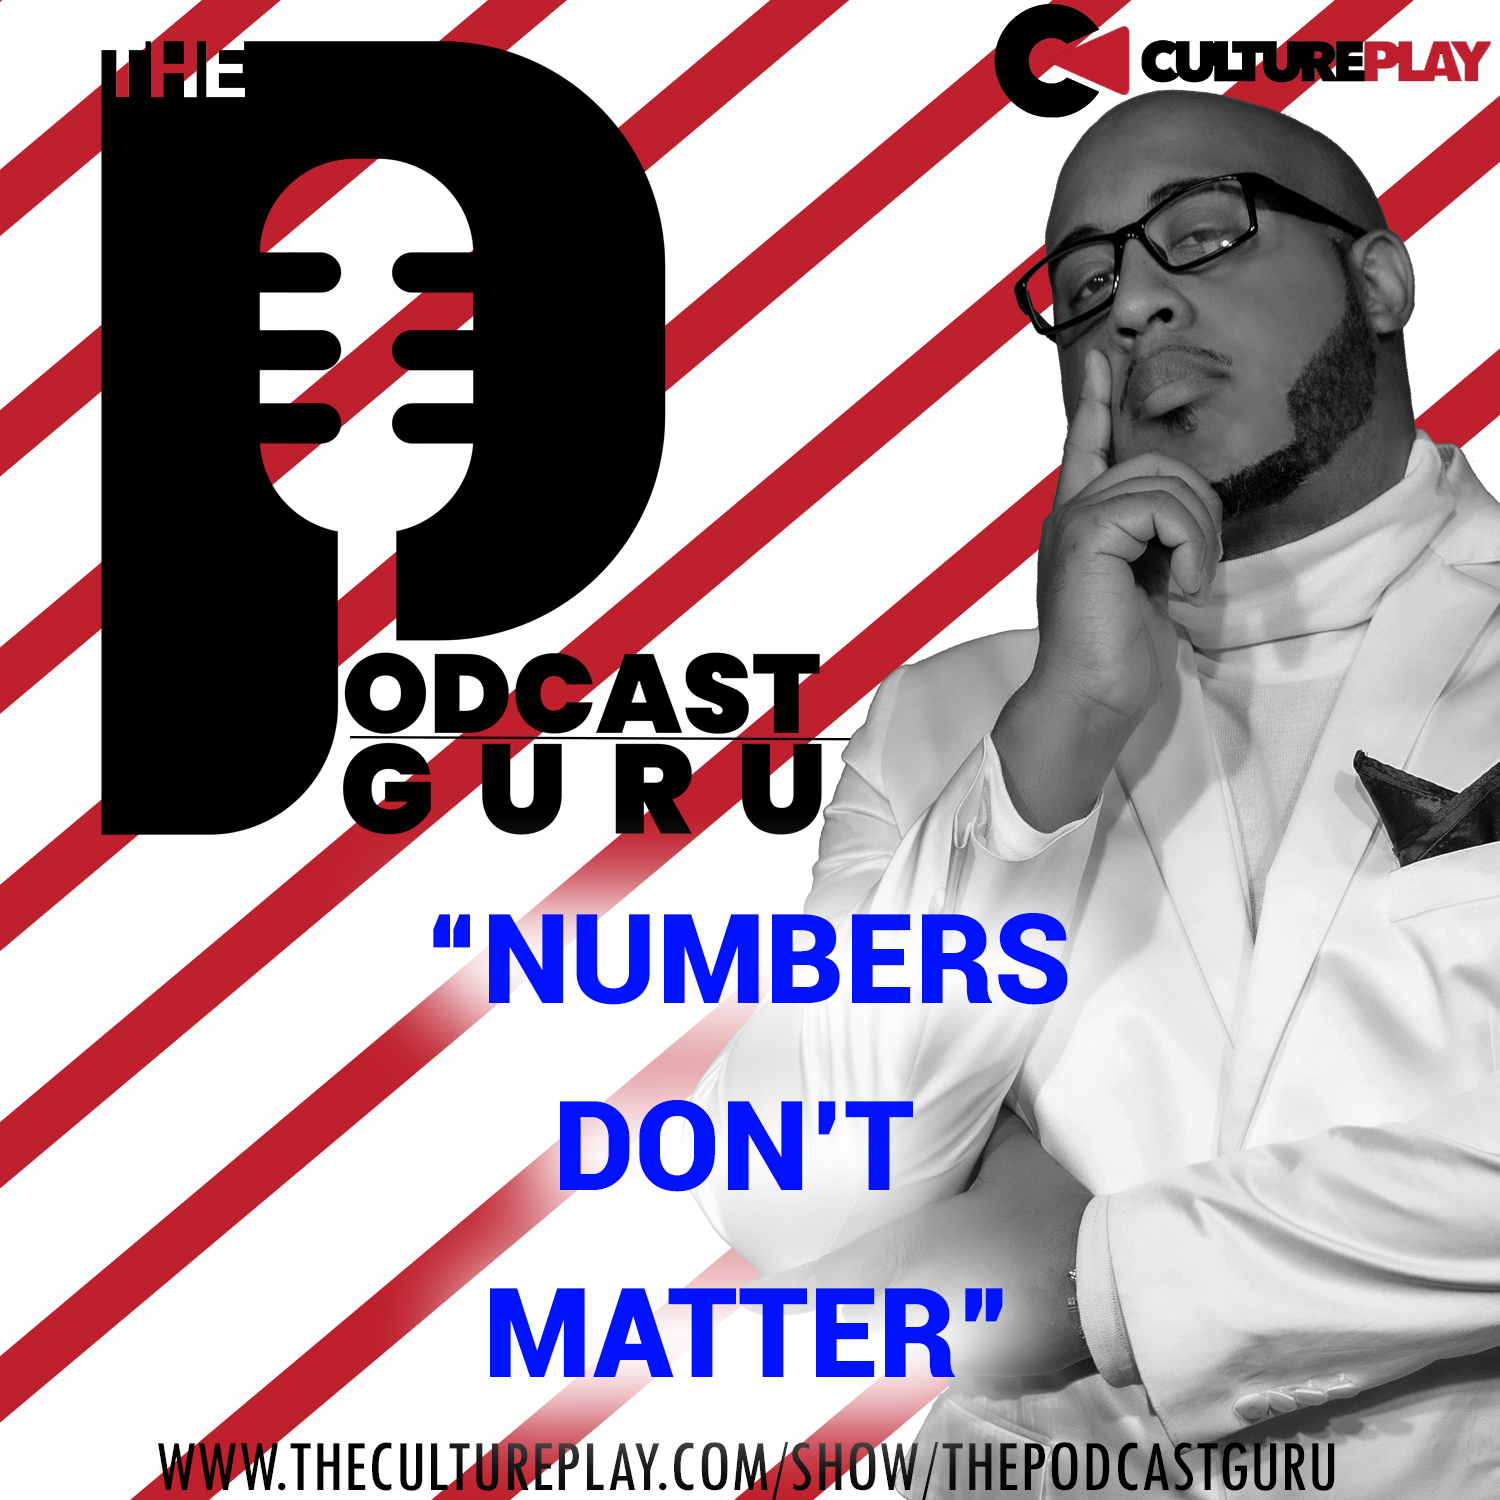 Podcast Guru - Numbers Done Matter